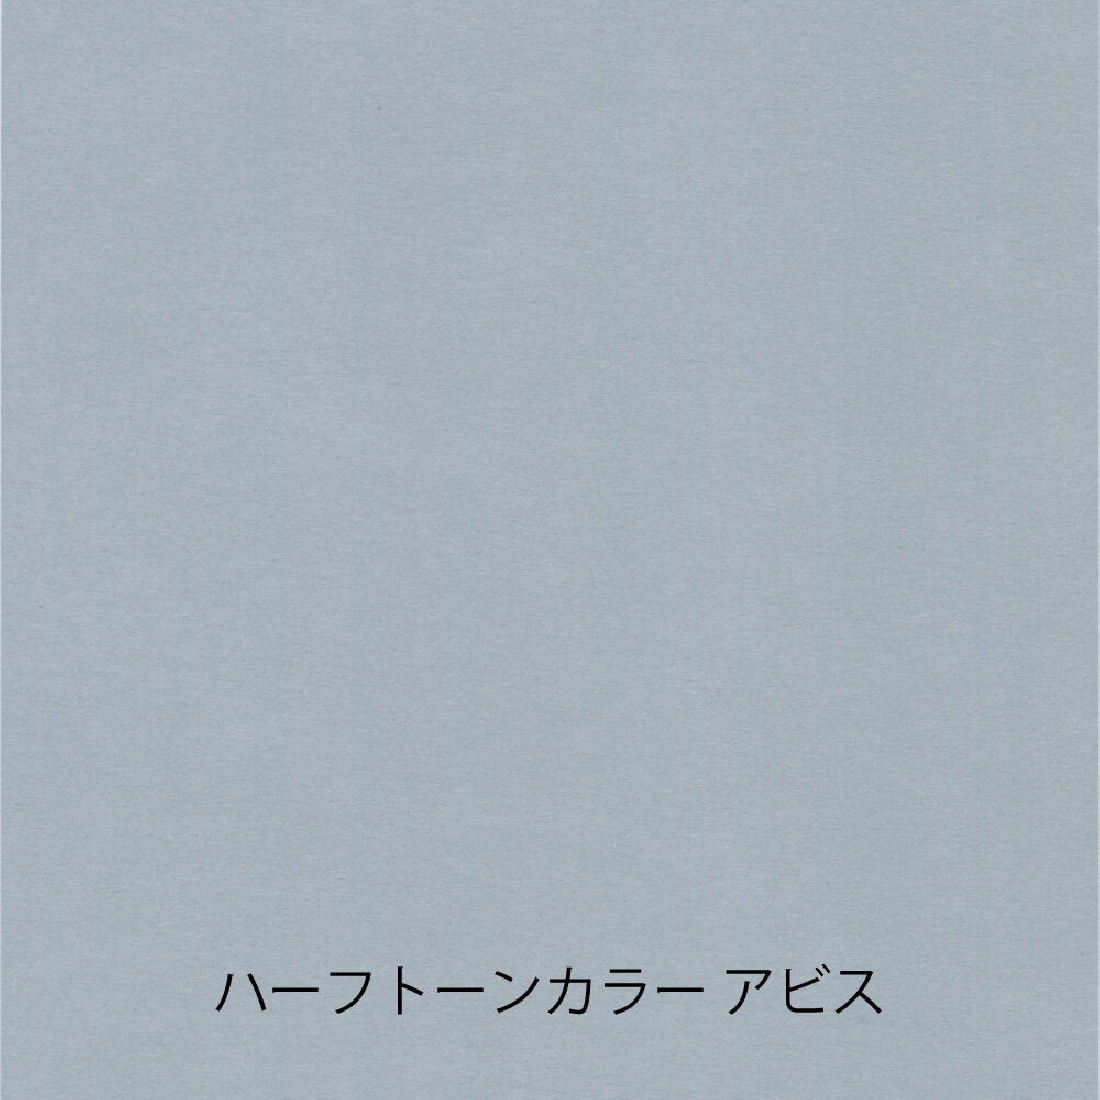 Yamamoto Paper tasting Gray vol.4